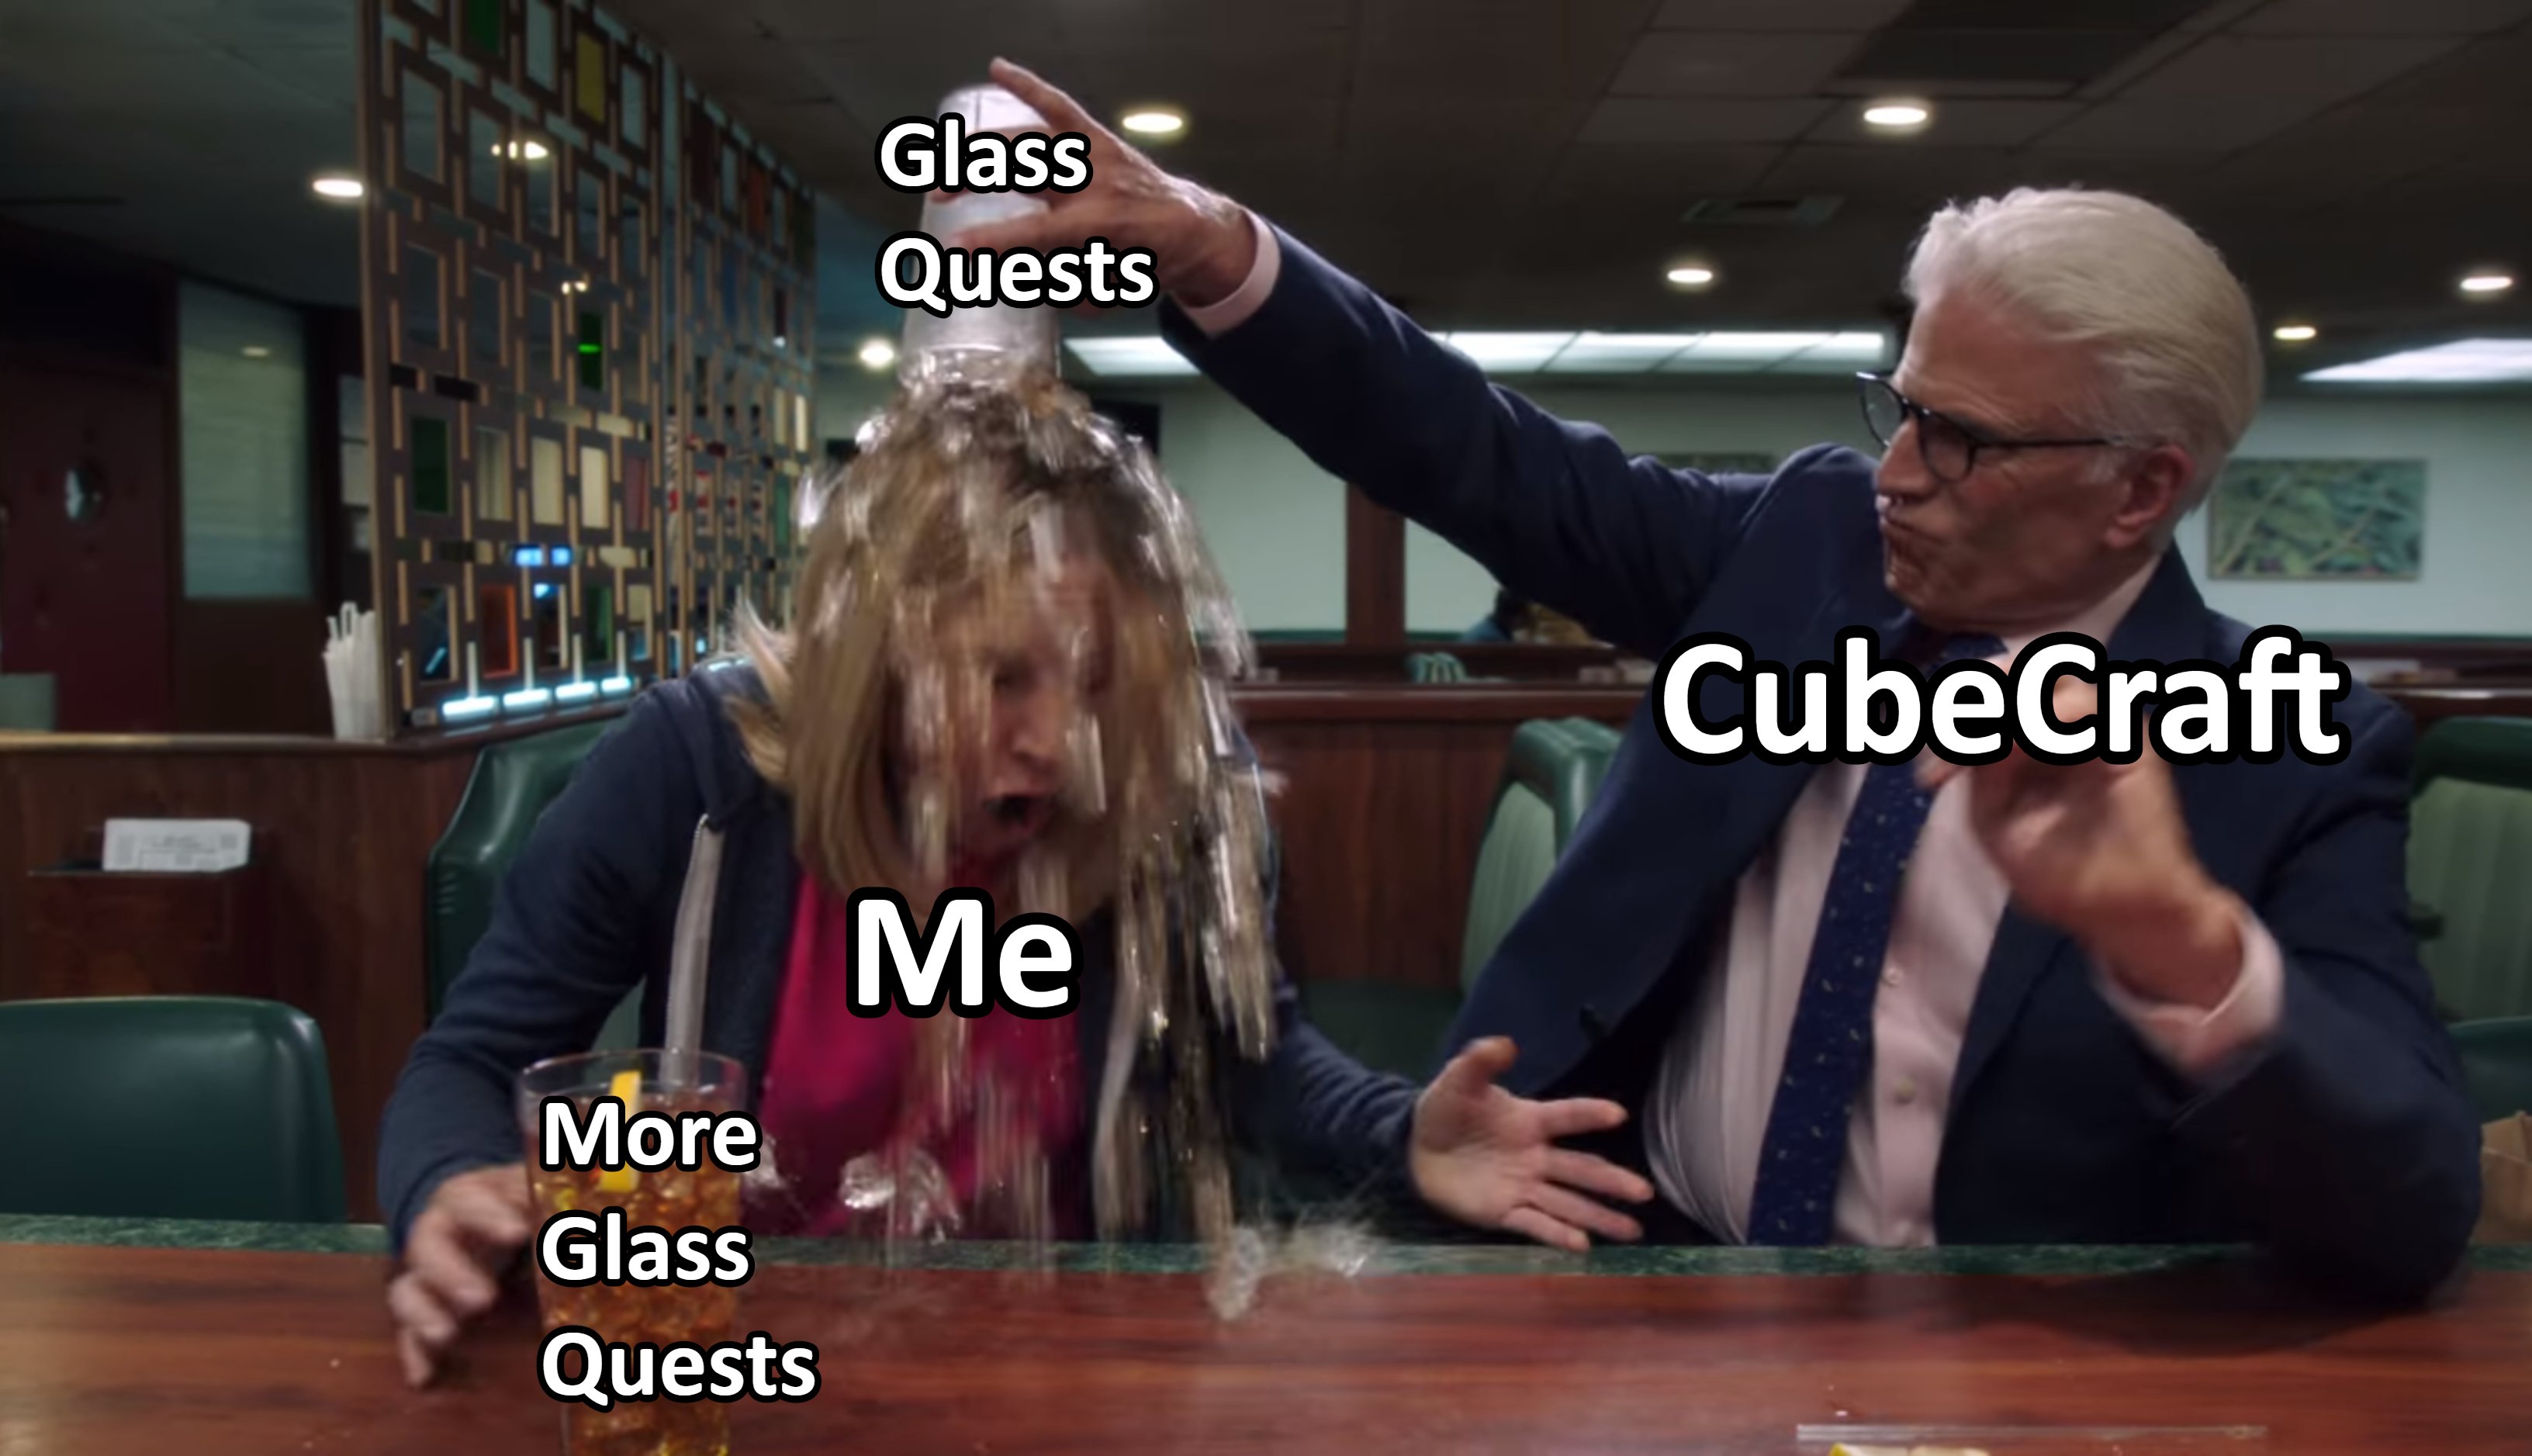 ccg meme glass quest yes.jpg